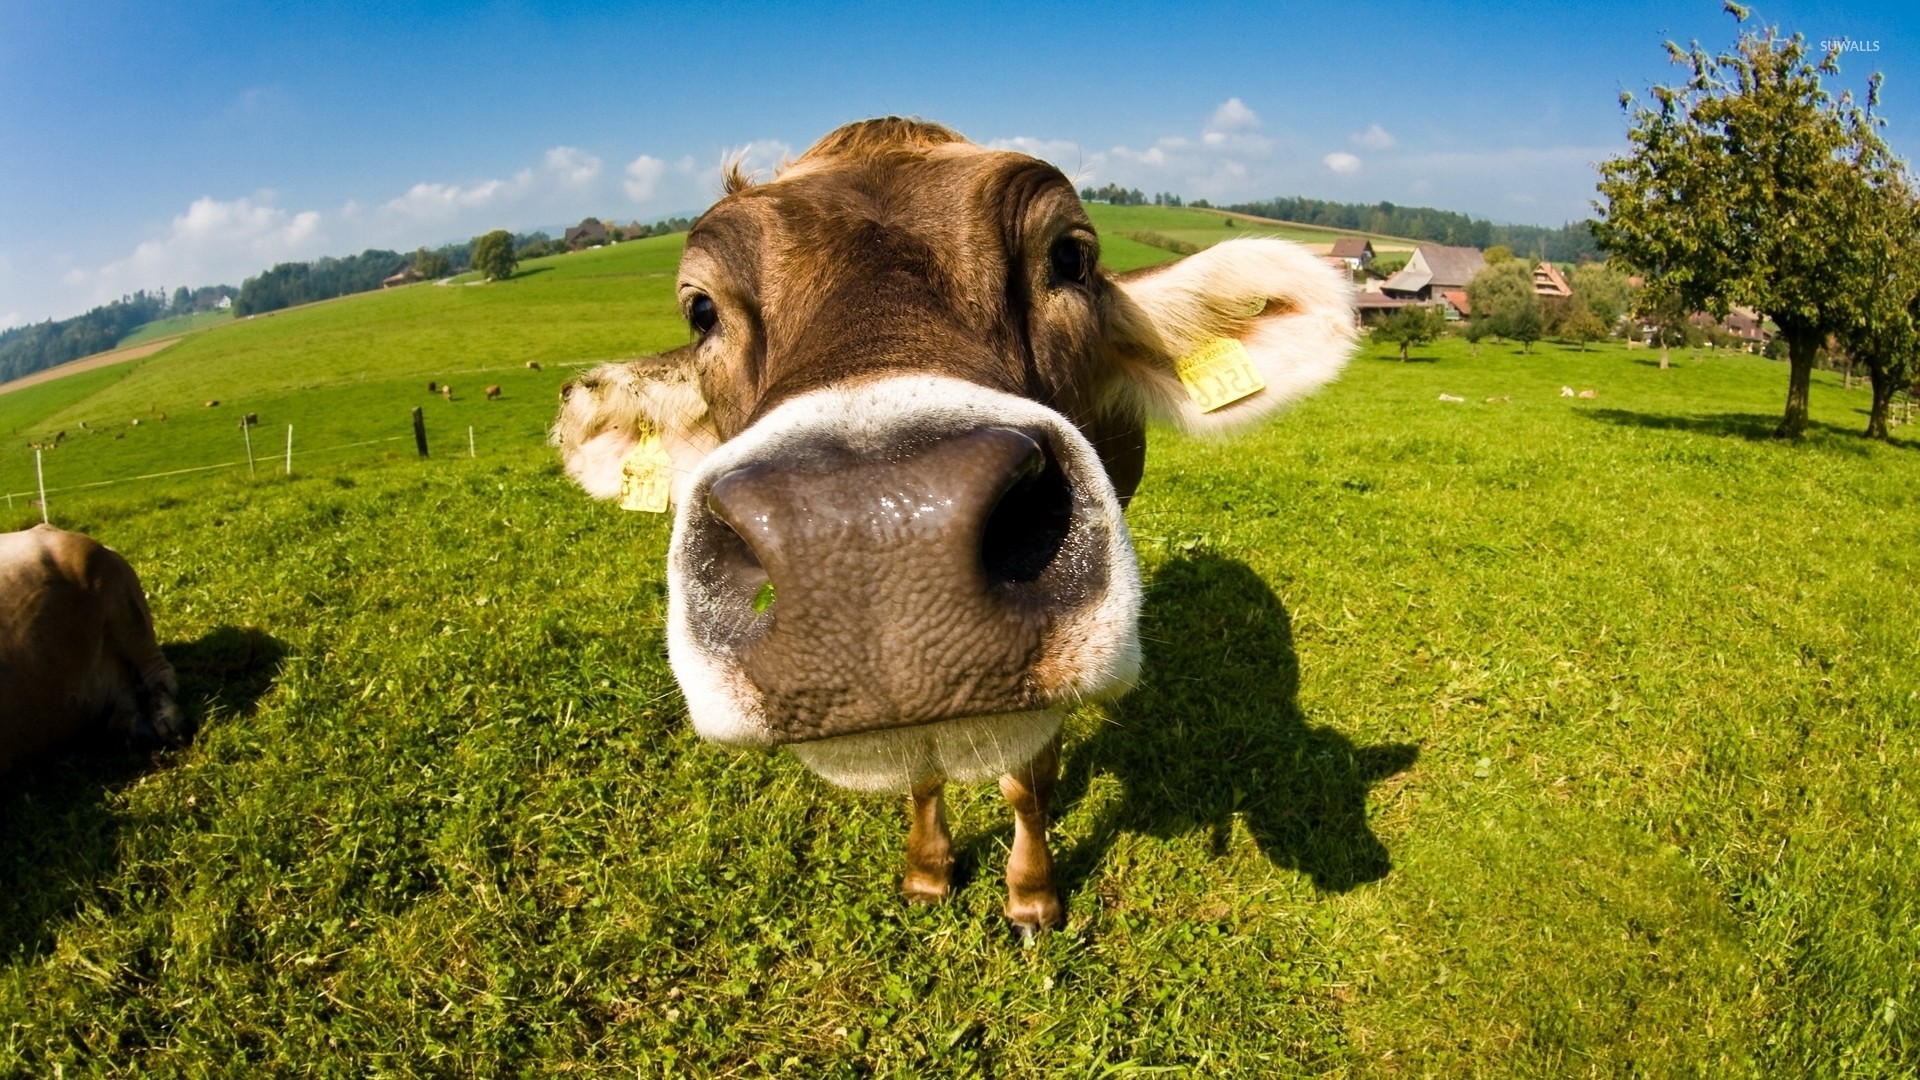 68738 Cow Wallpapers Images Stock Photos  Vectors  Shutterstock